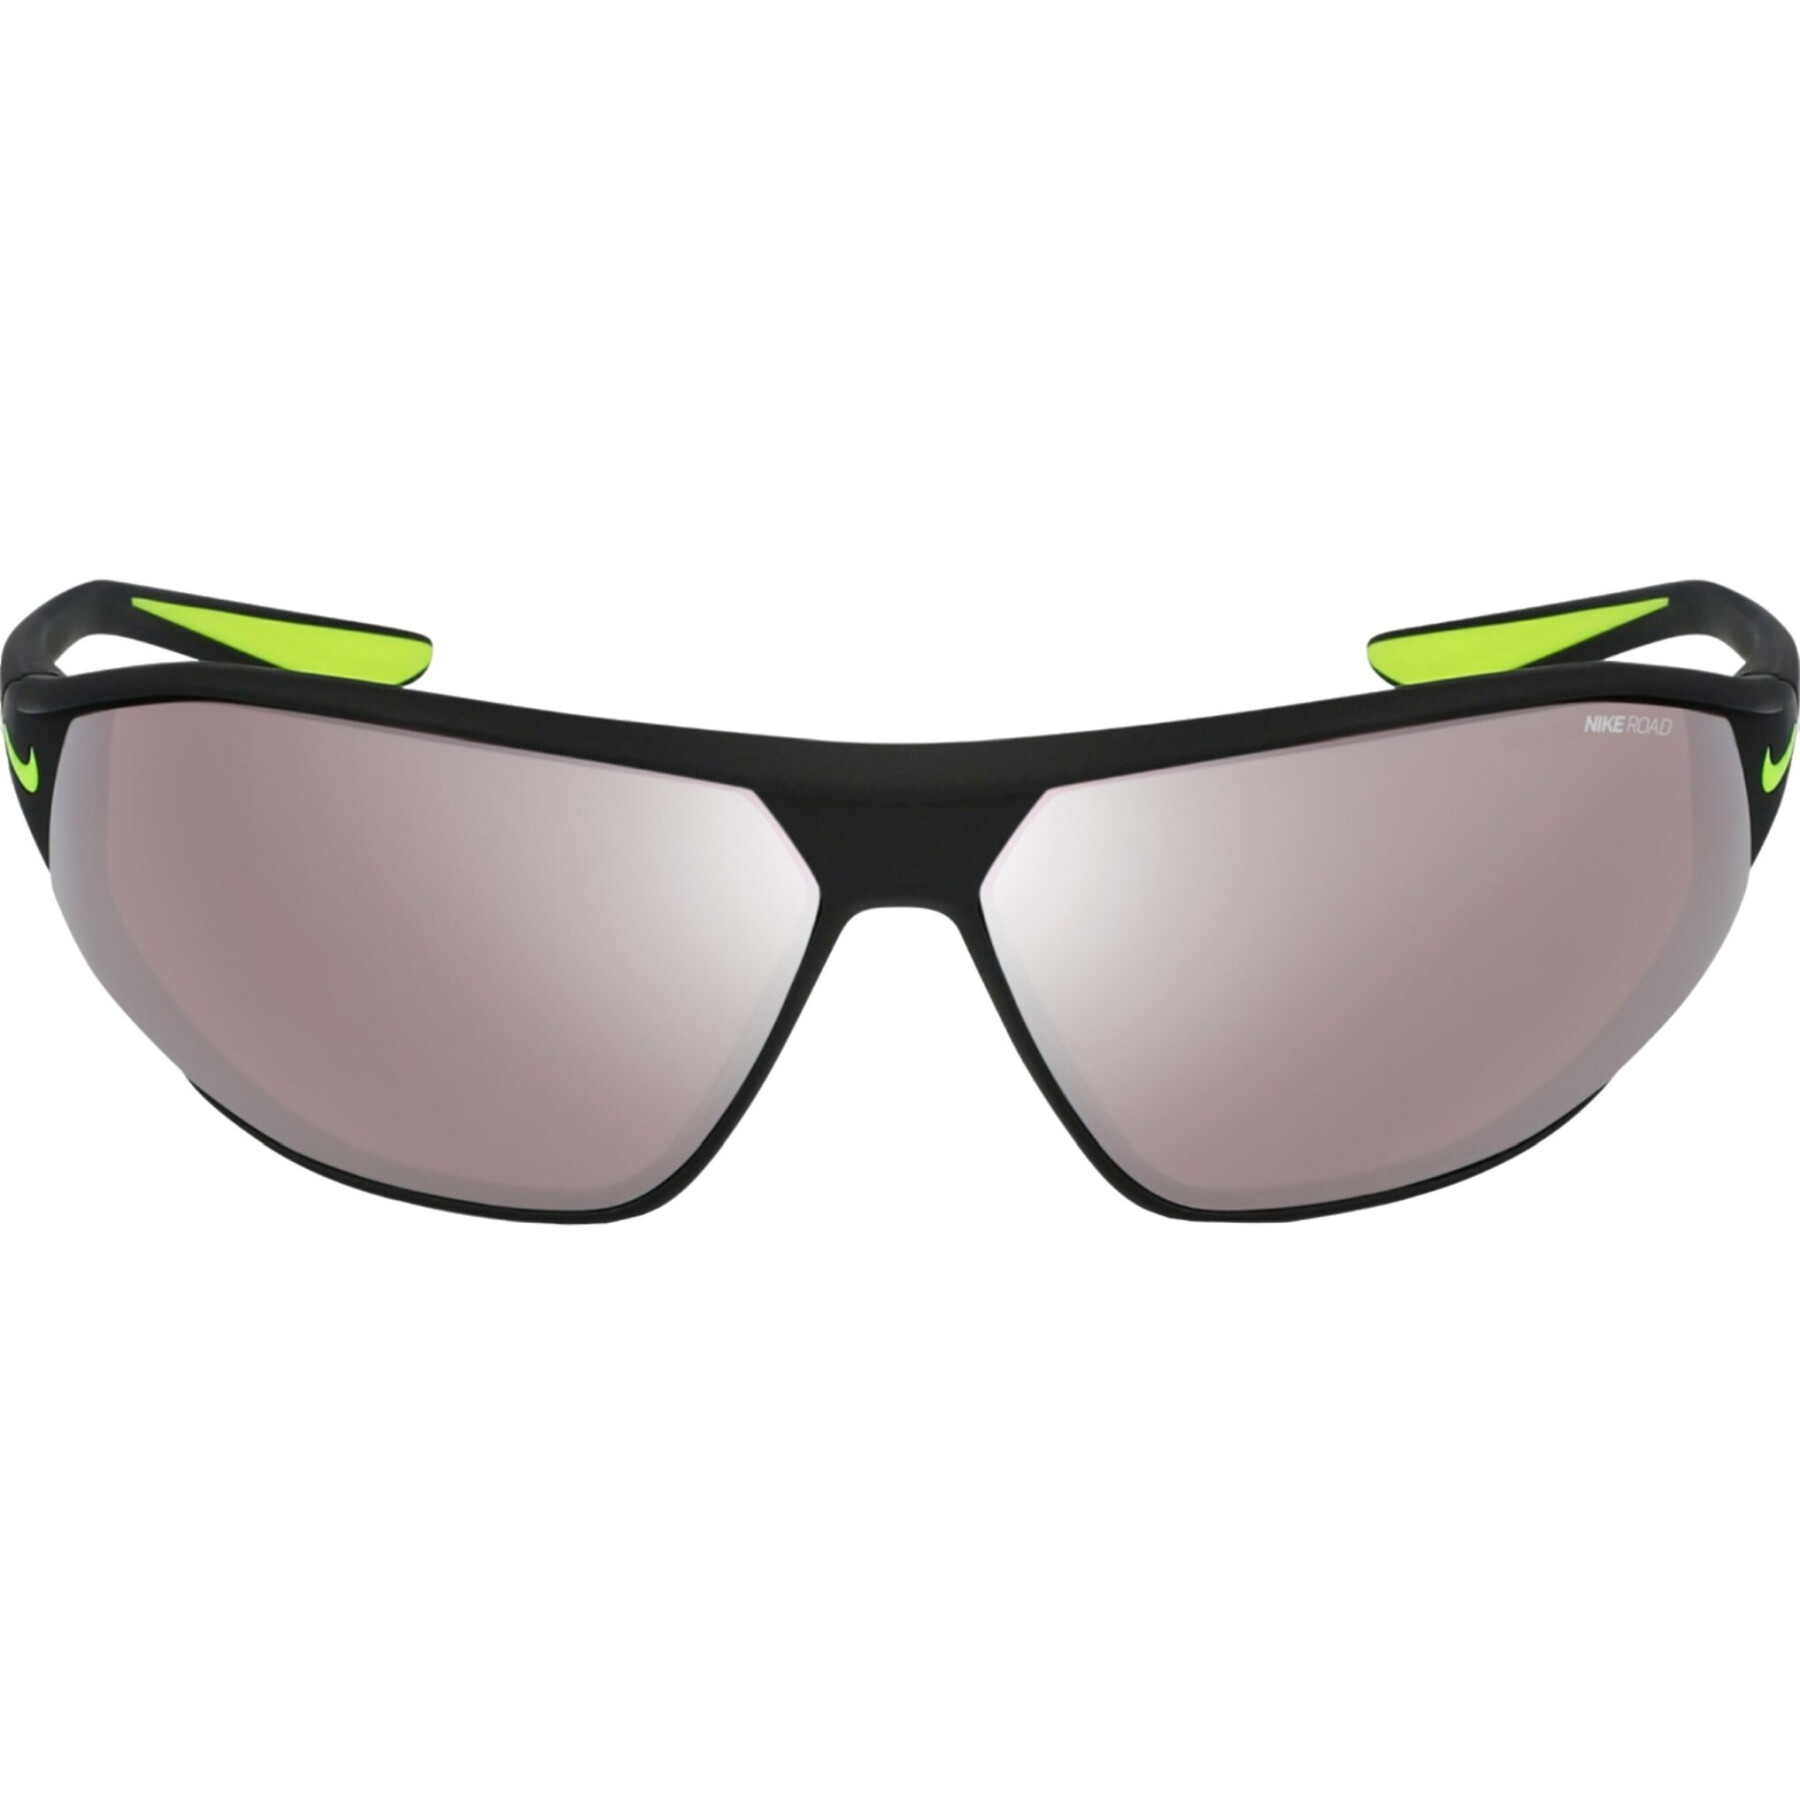 Sunglasses Nike AEROSWIFTEDQ0